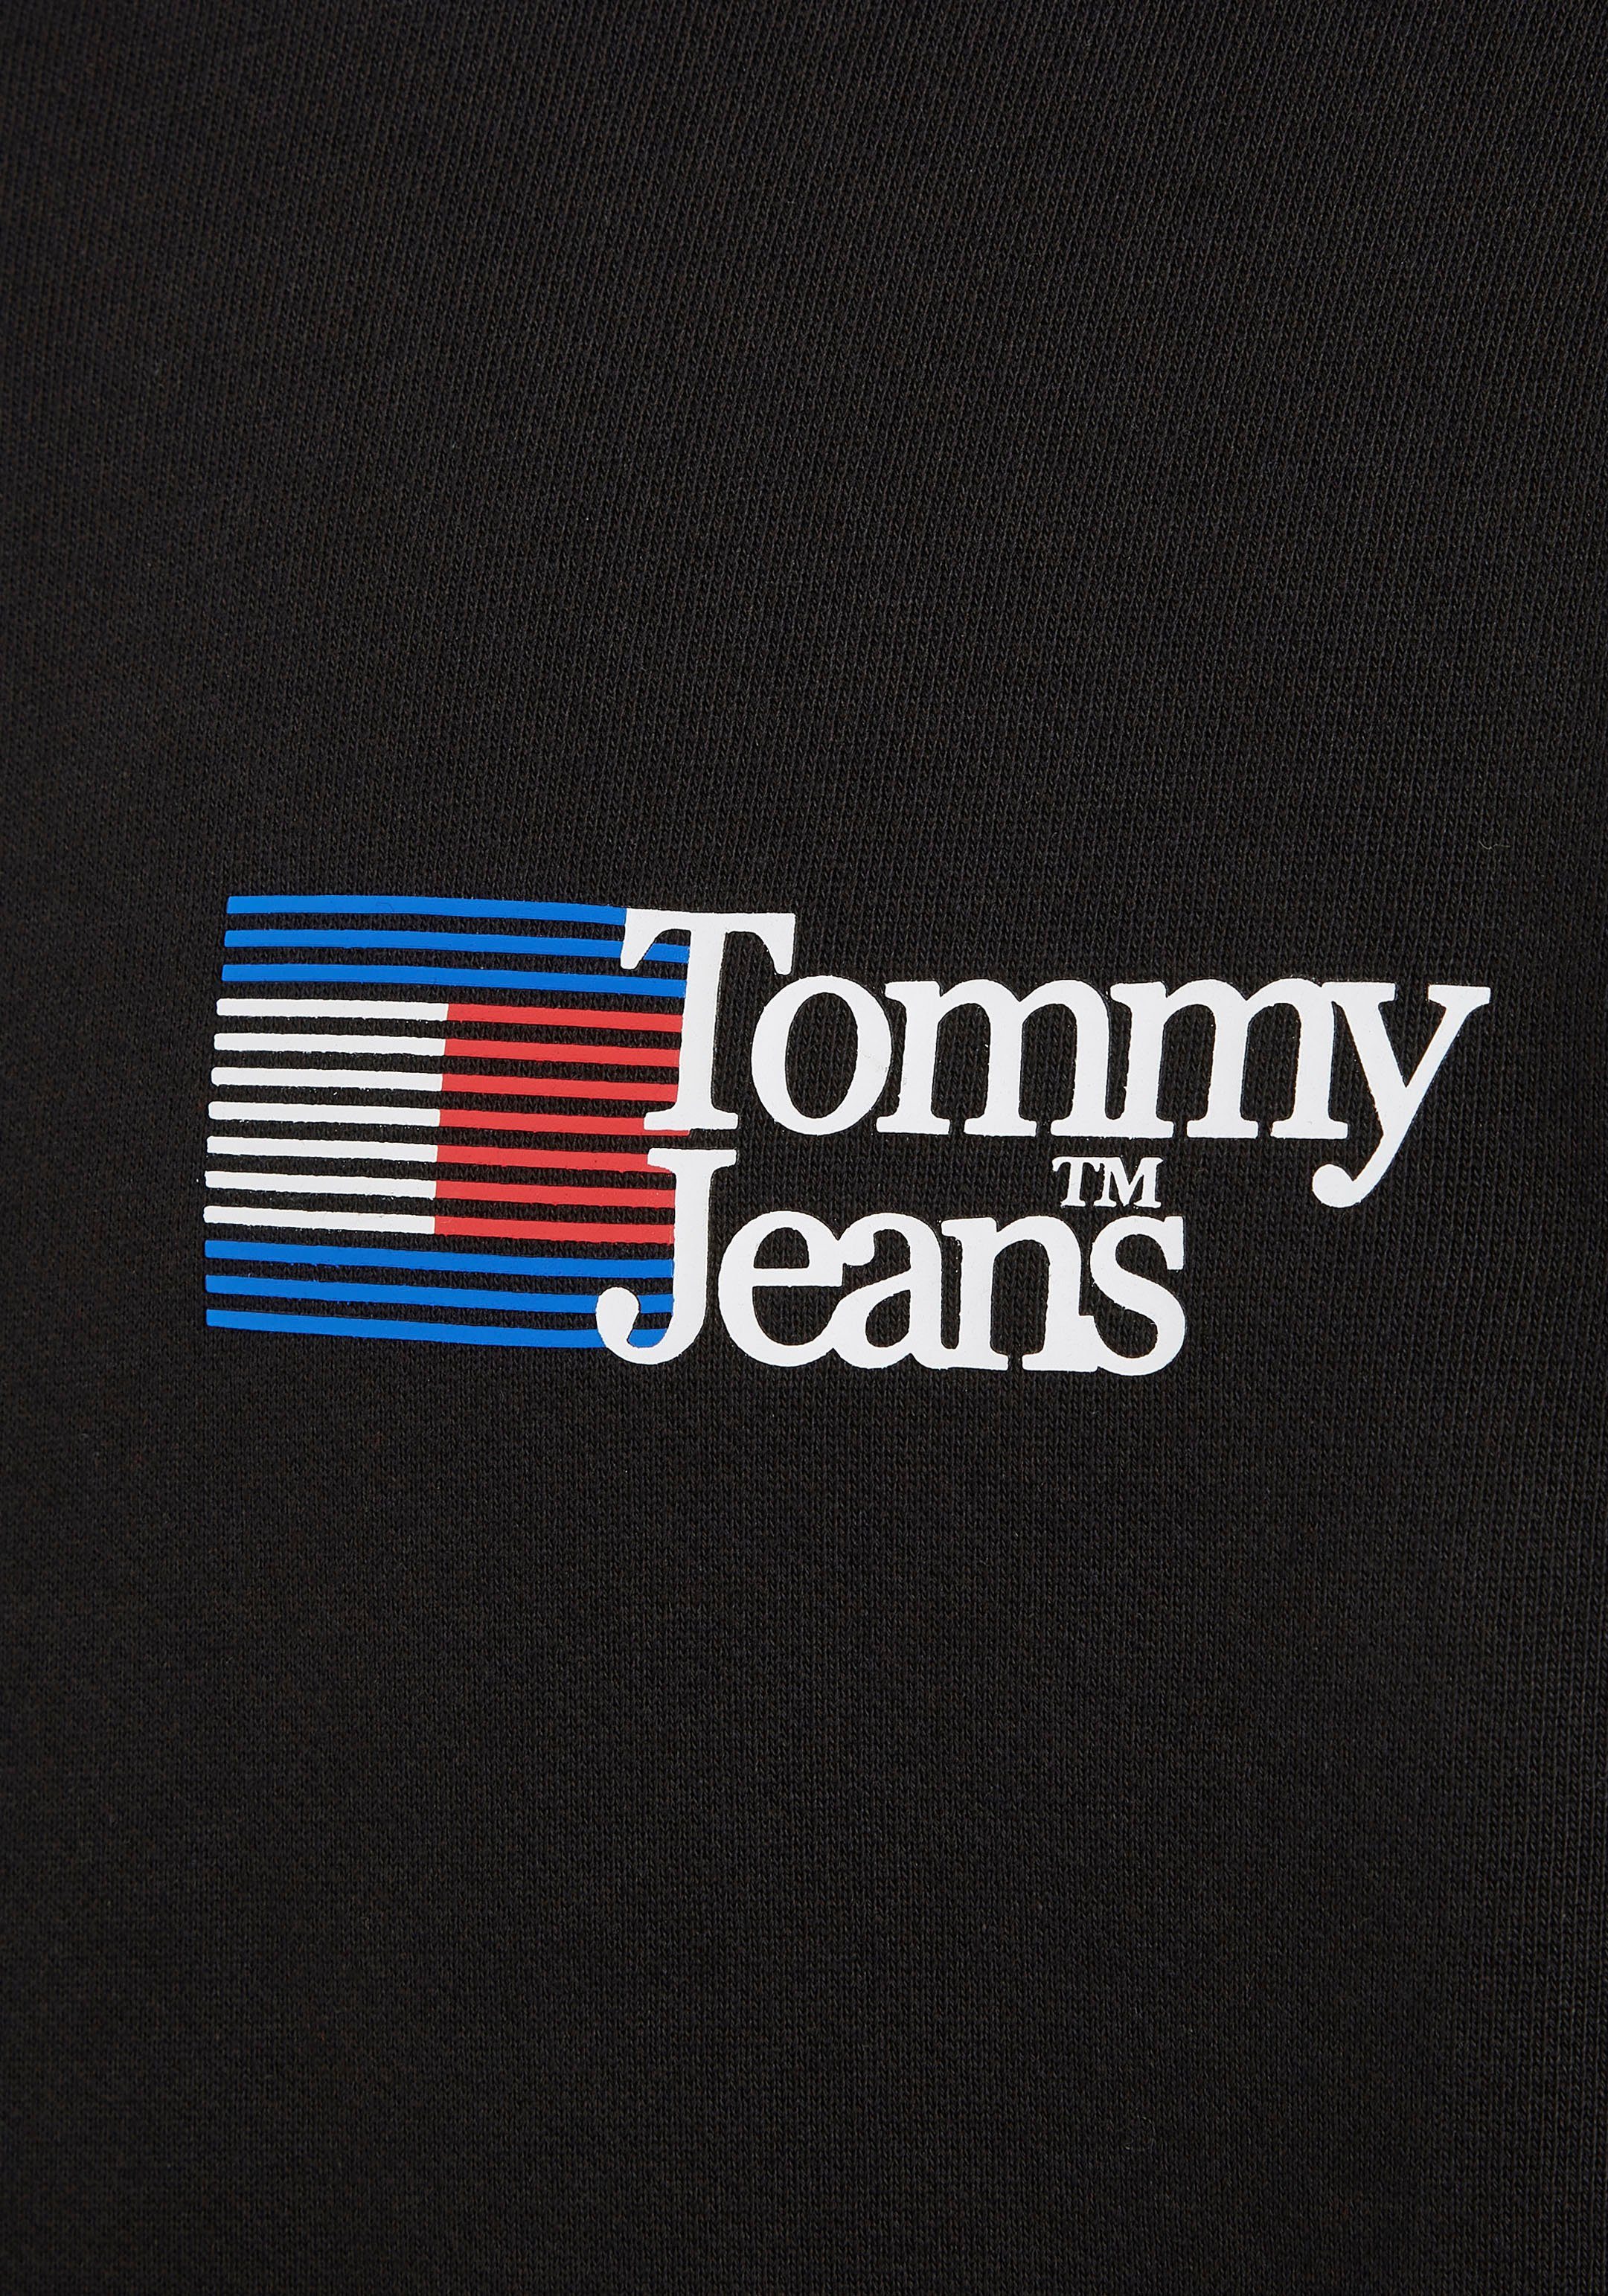 Black Logodruck Jeans TJM FULL ZIP Sweatshirt ENTRY REG mit Tommy